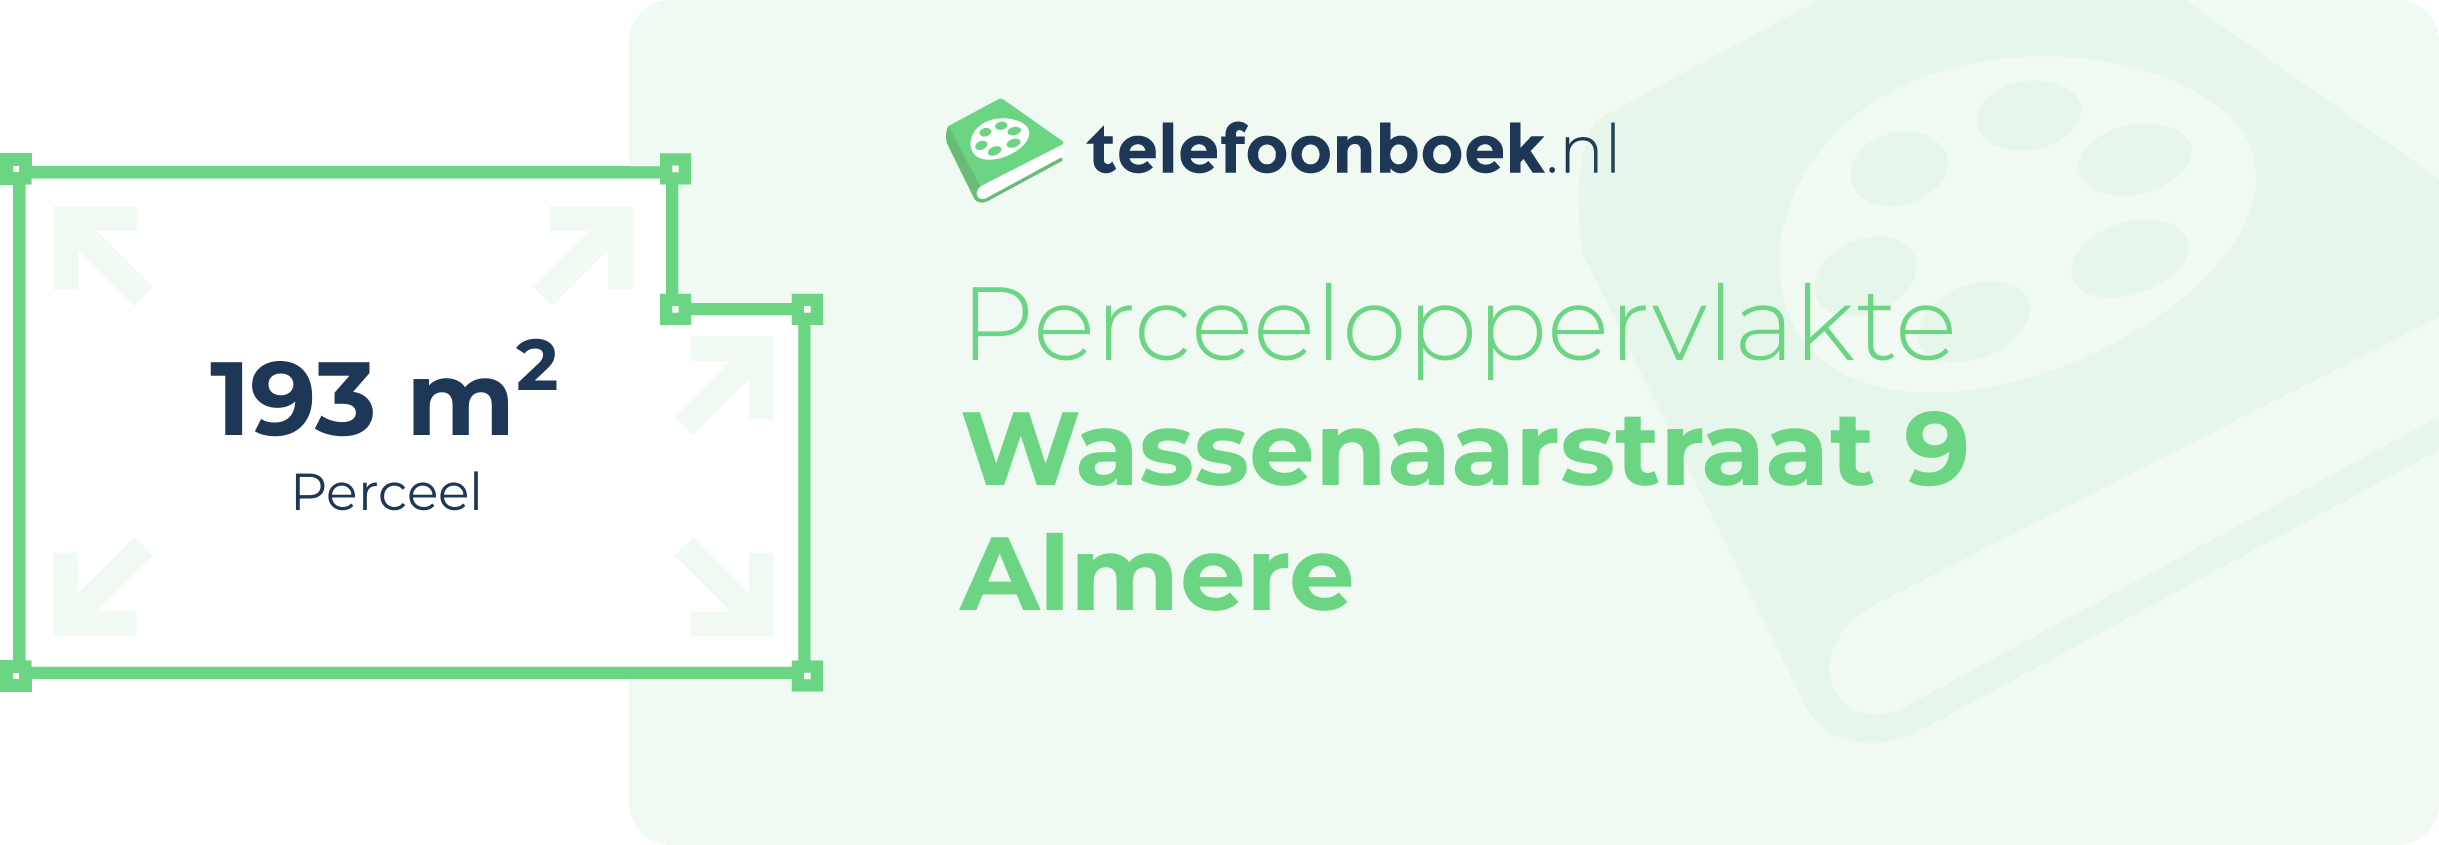 Perceeloppervlakte Wassenaarstraat 9 Almere